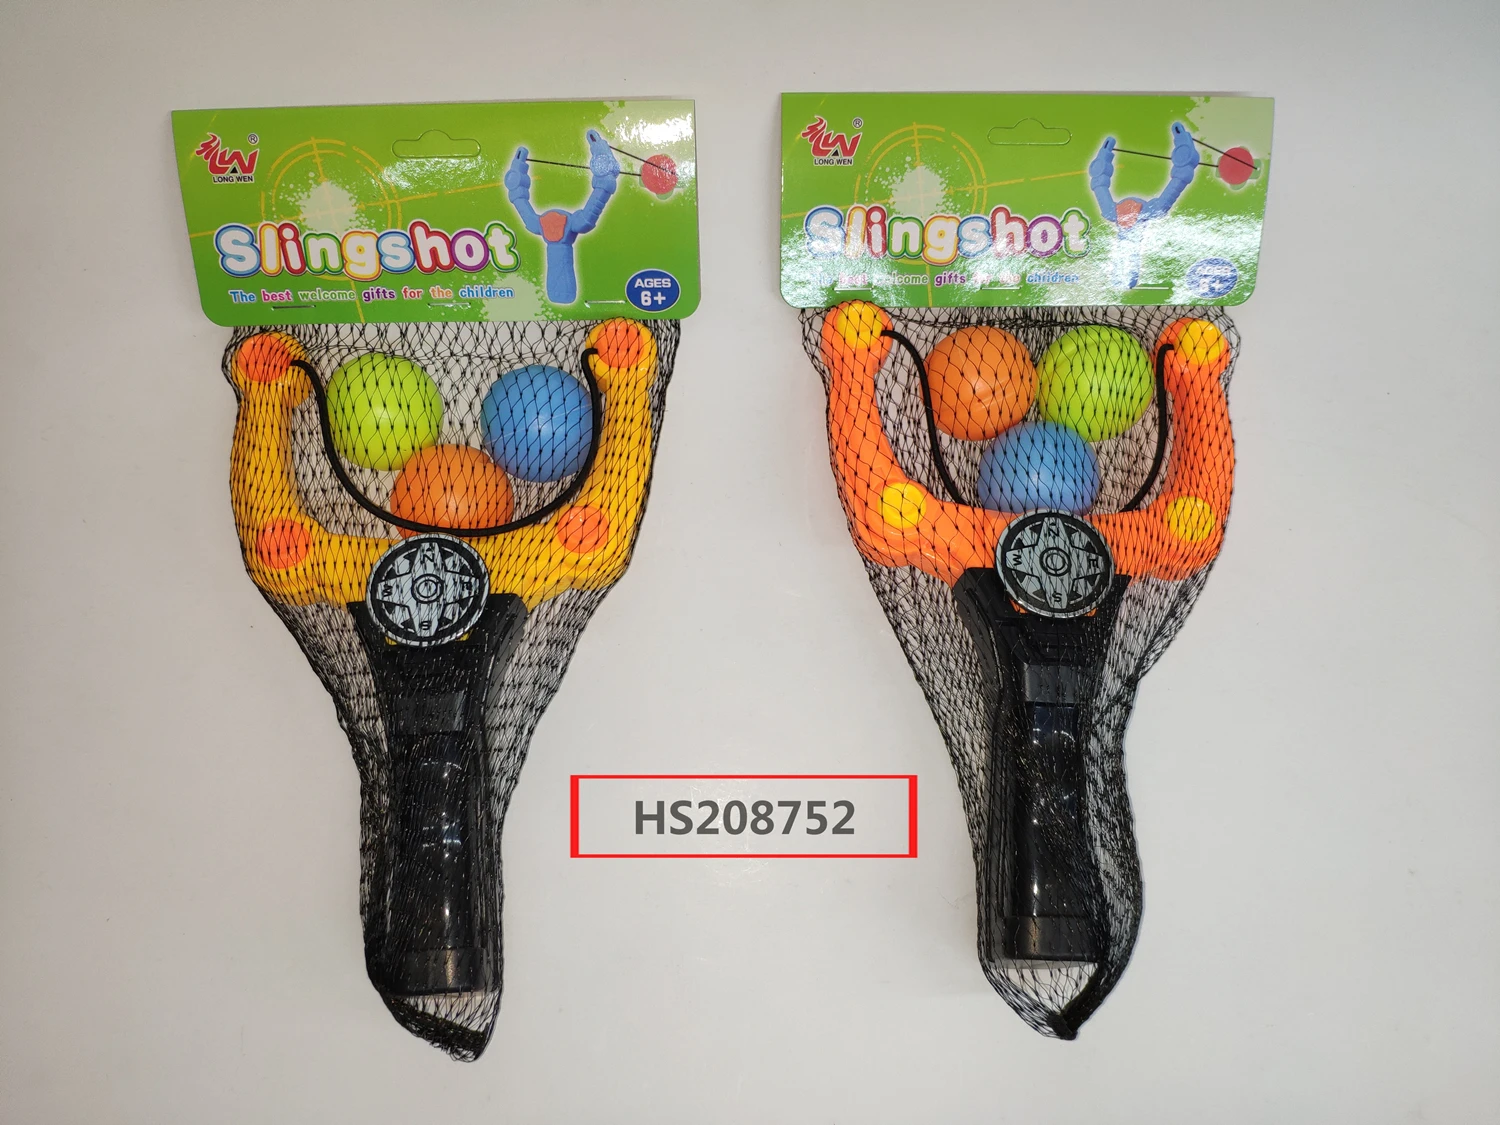 HS208752, Huwsin Toys, Children's plastic slingshot sport catapult toy with ball